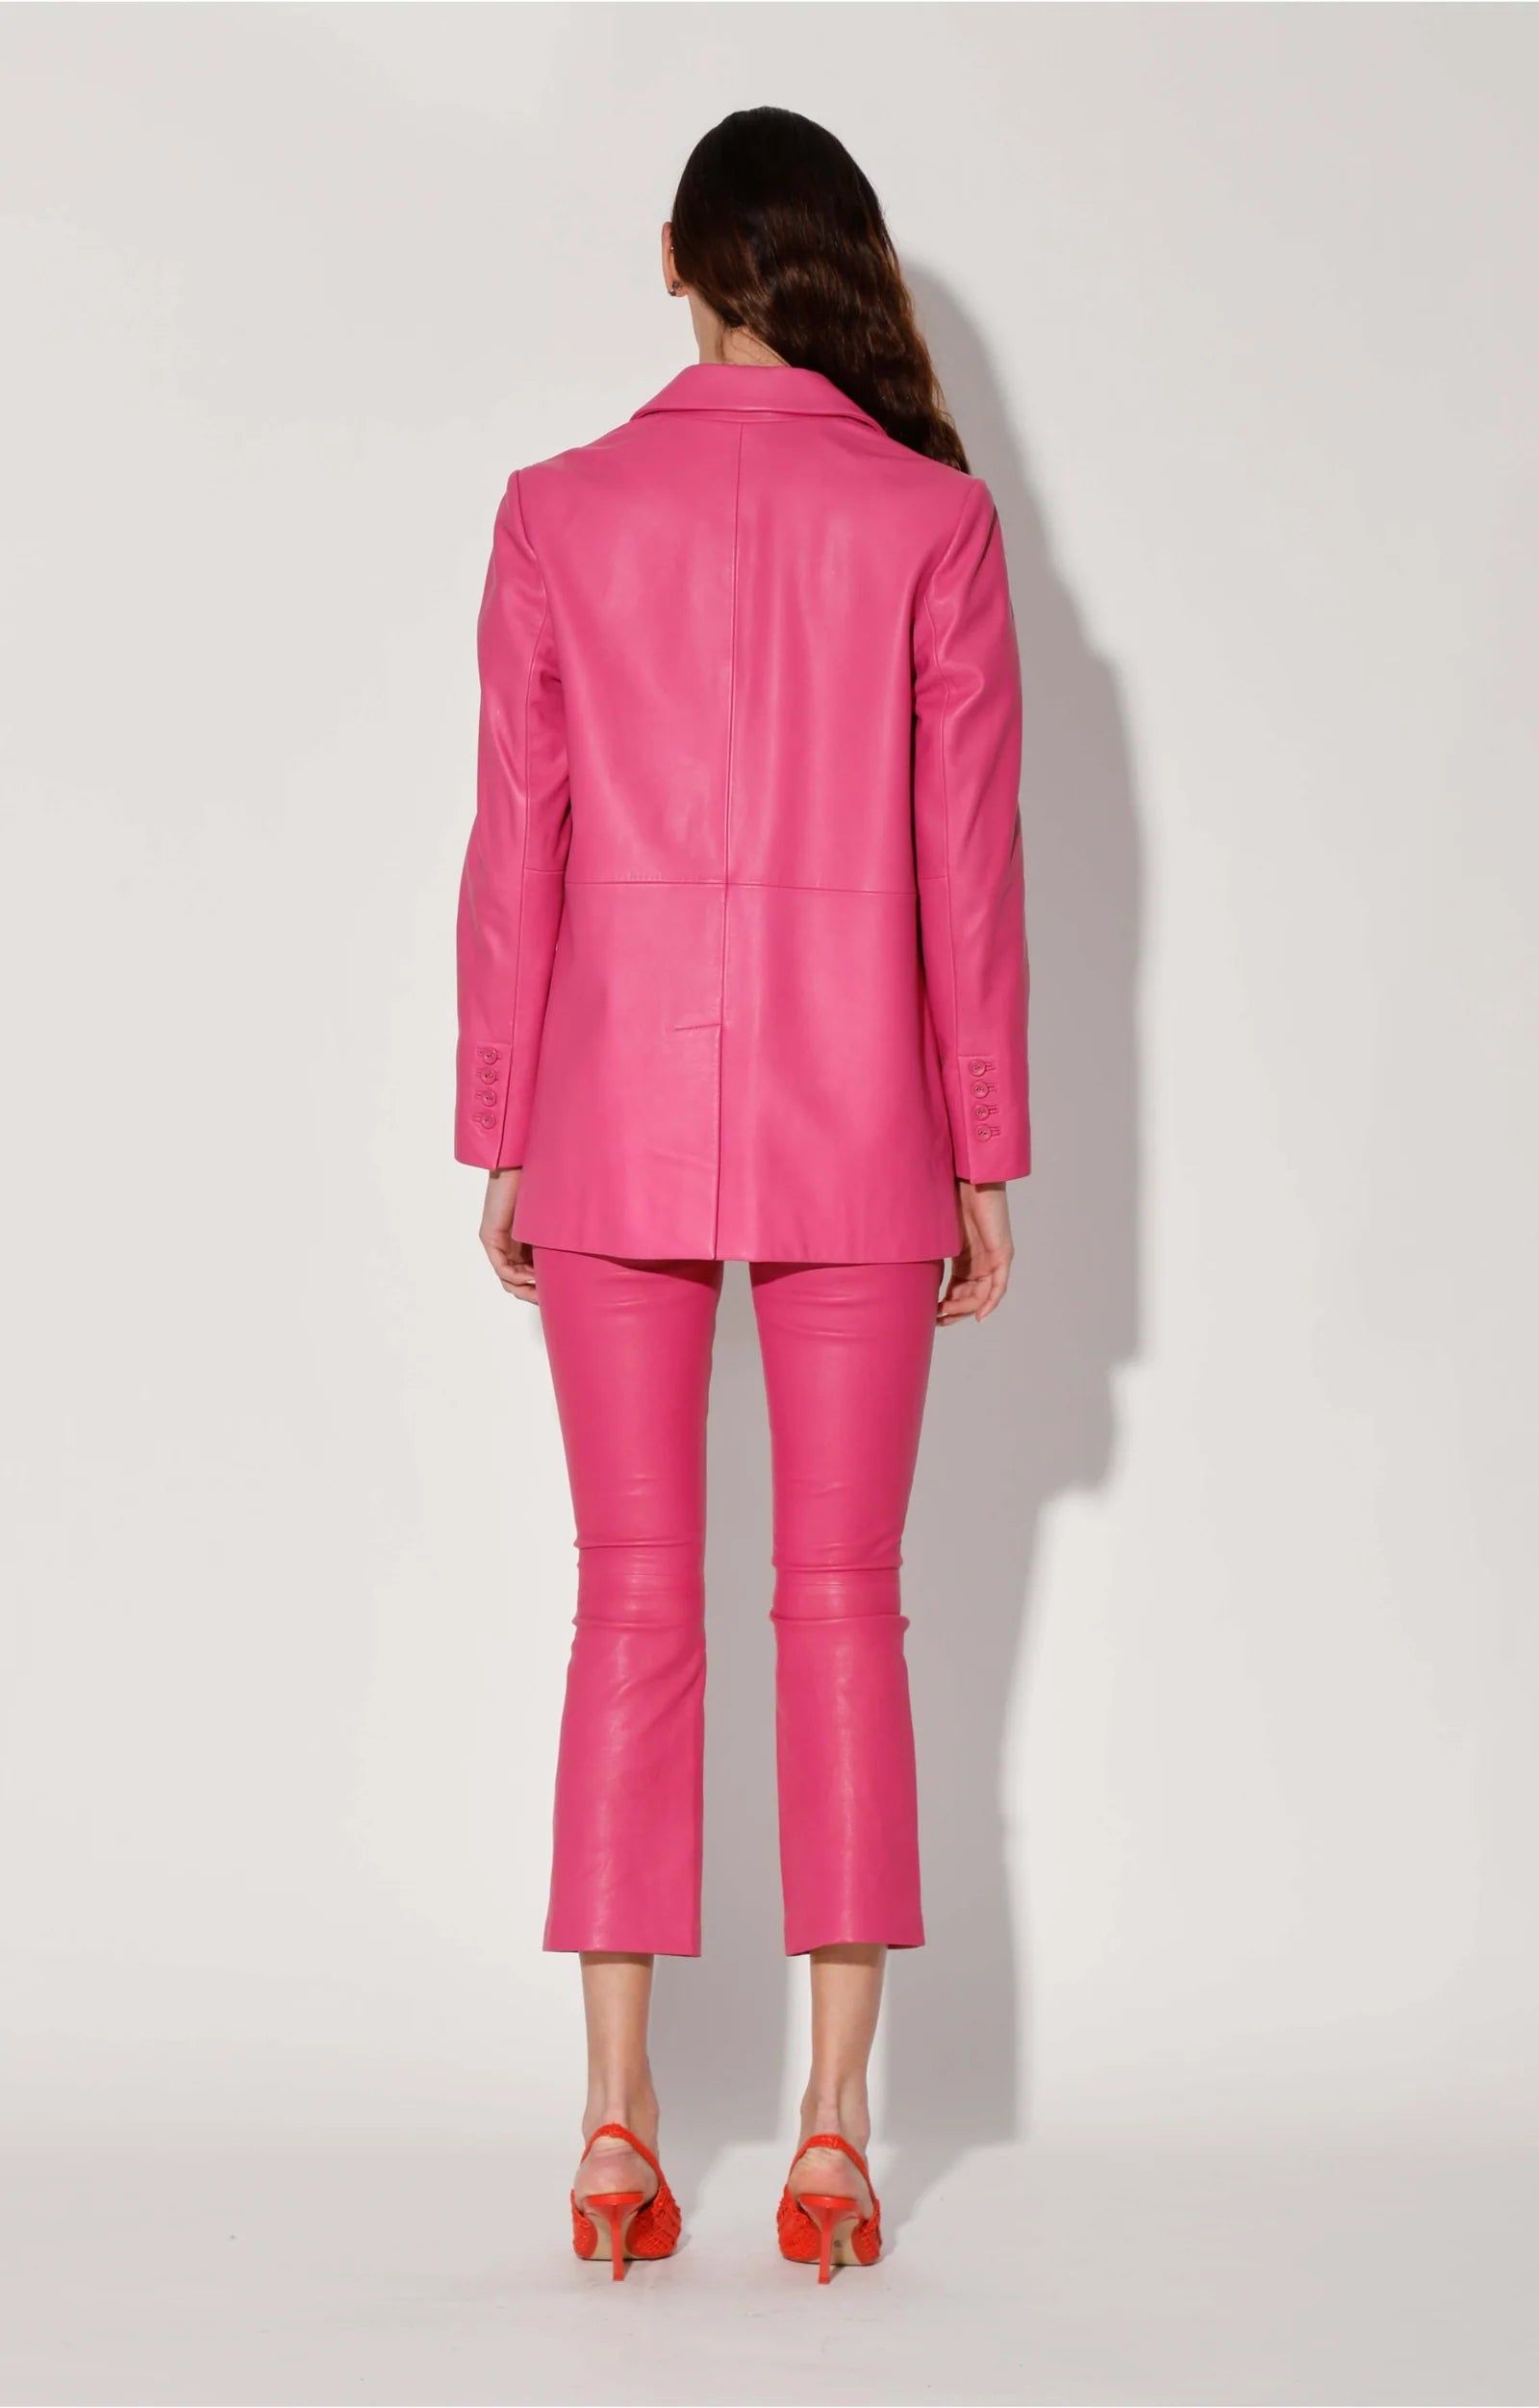 Walter Baker Kiki Leather Blazer in Bright Pink - clever alice